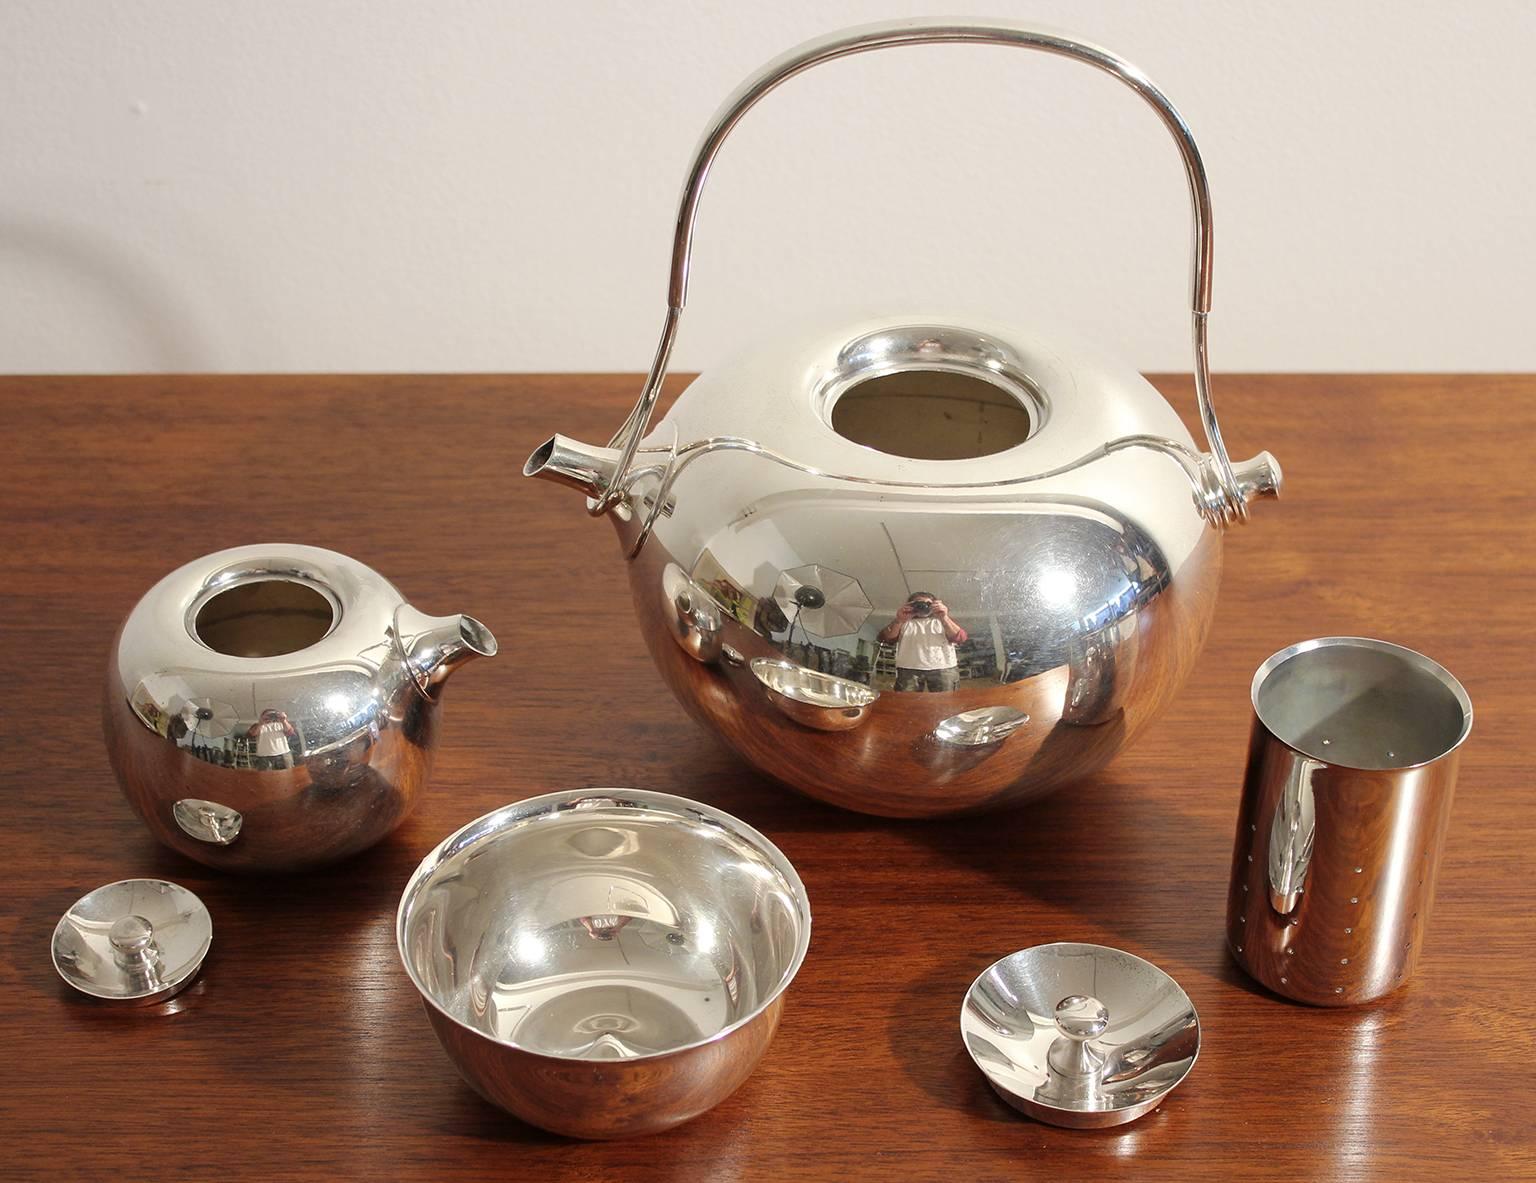 20th Century Modernist Sculptural Vivianna Torun for Dansk Silver Plate Tea Set with Tray